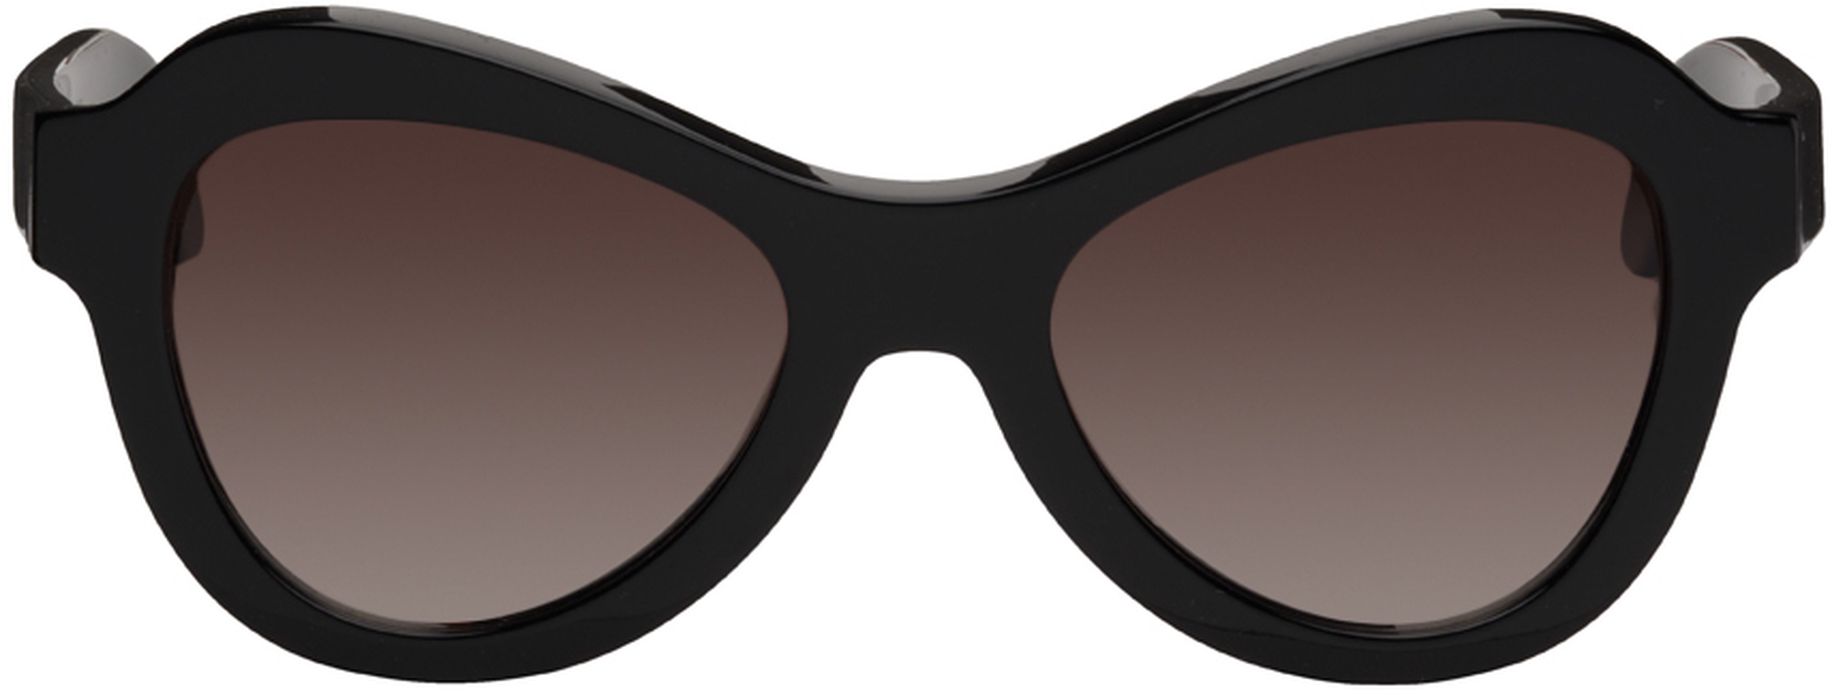 Kuboraum Black 72 Sunglasses